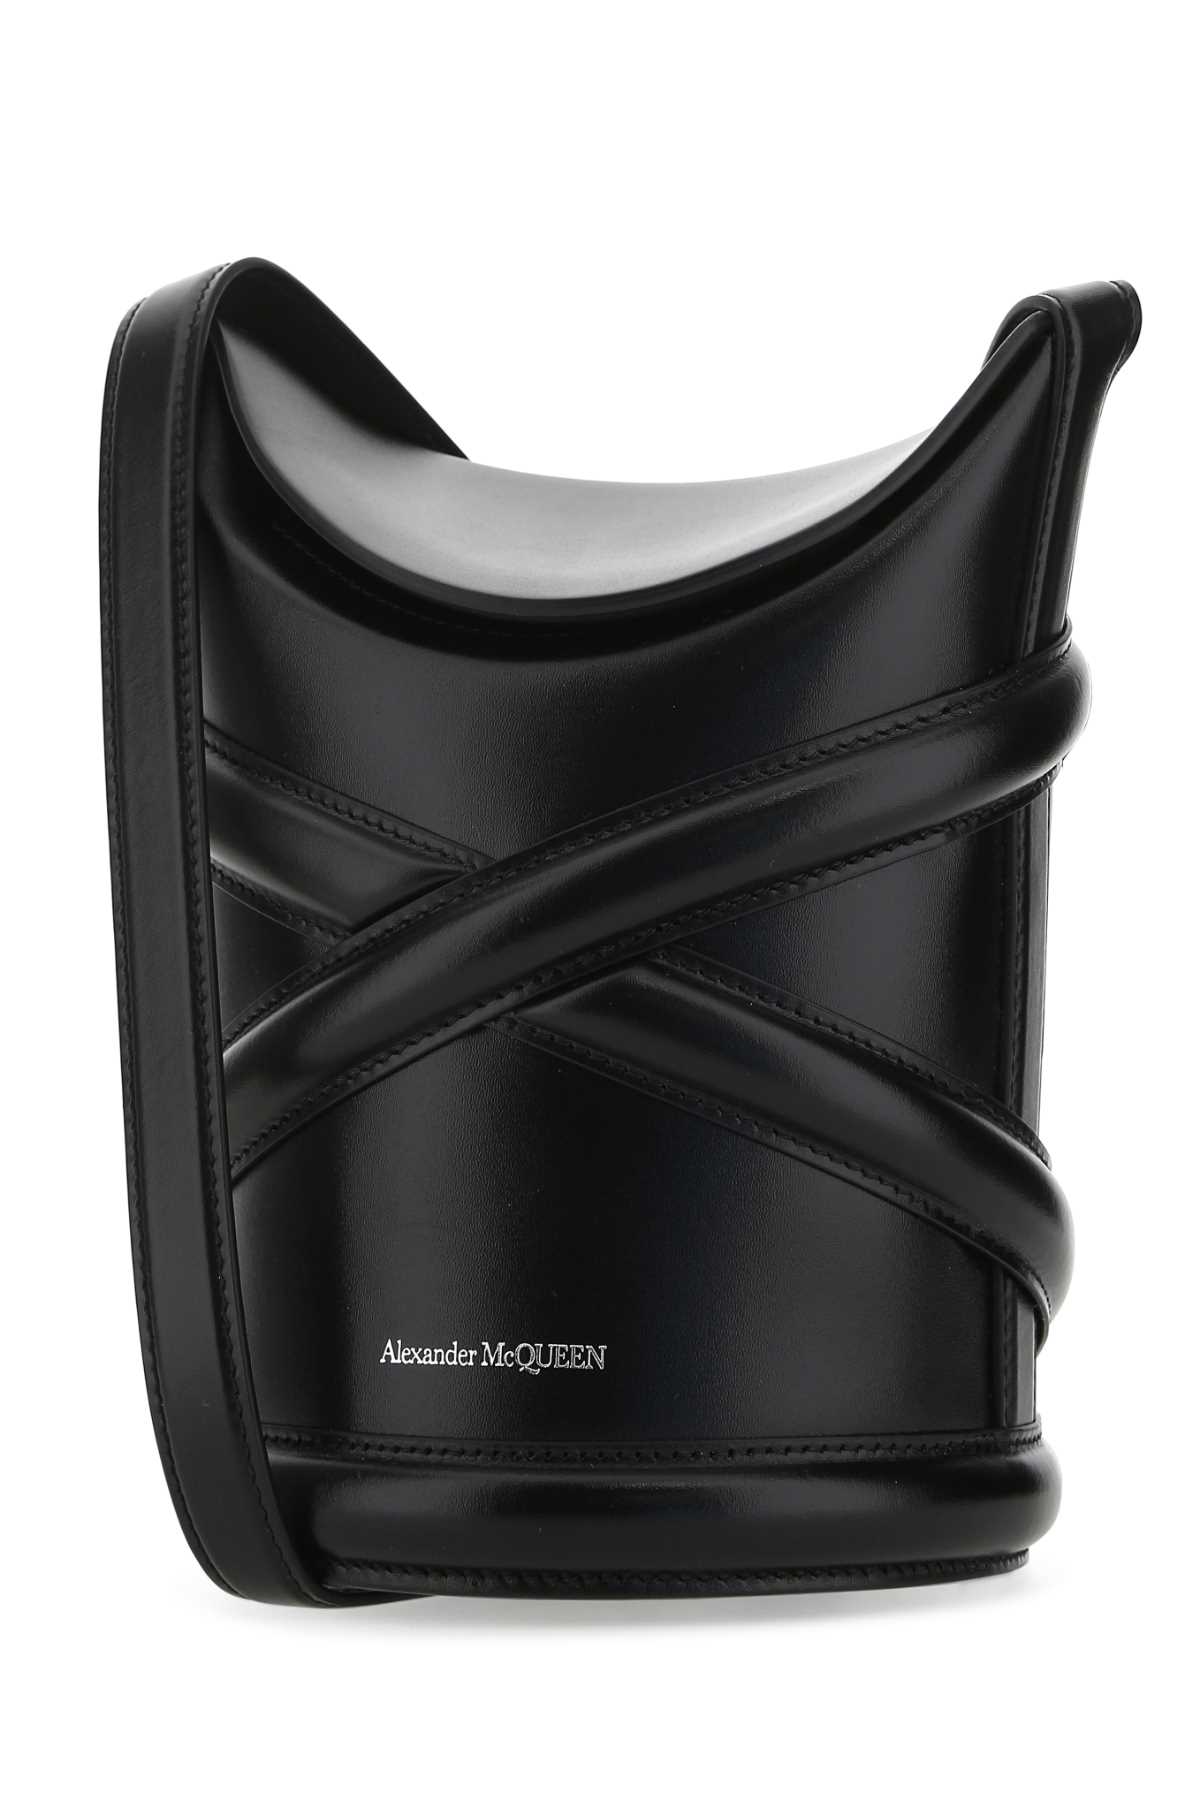 Alexander Mcqueen Black Leather The Curve Bucket Bag